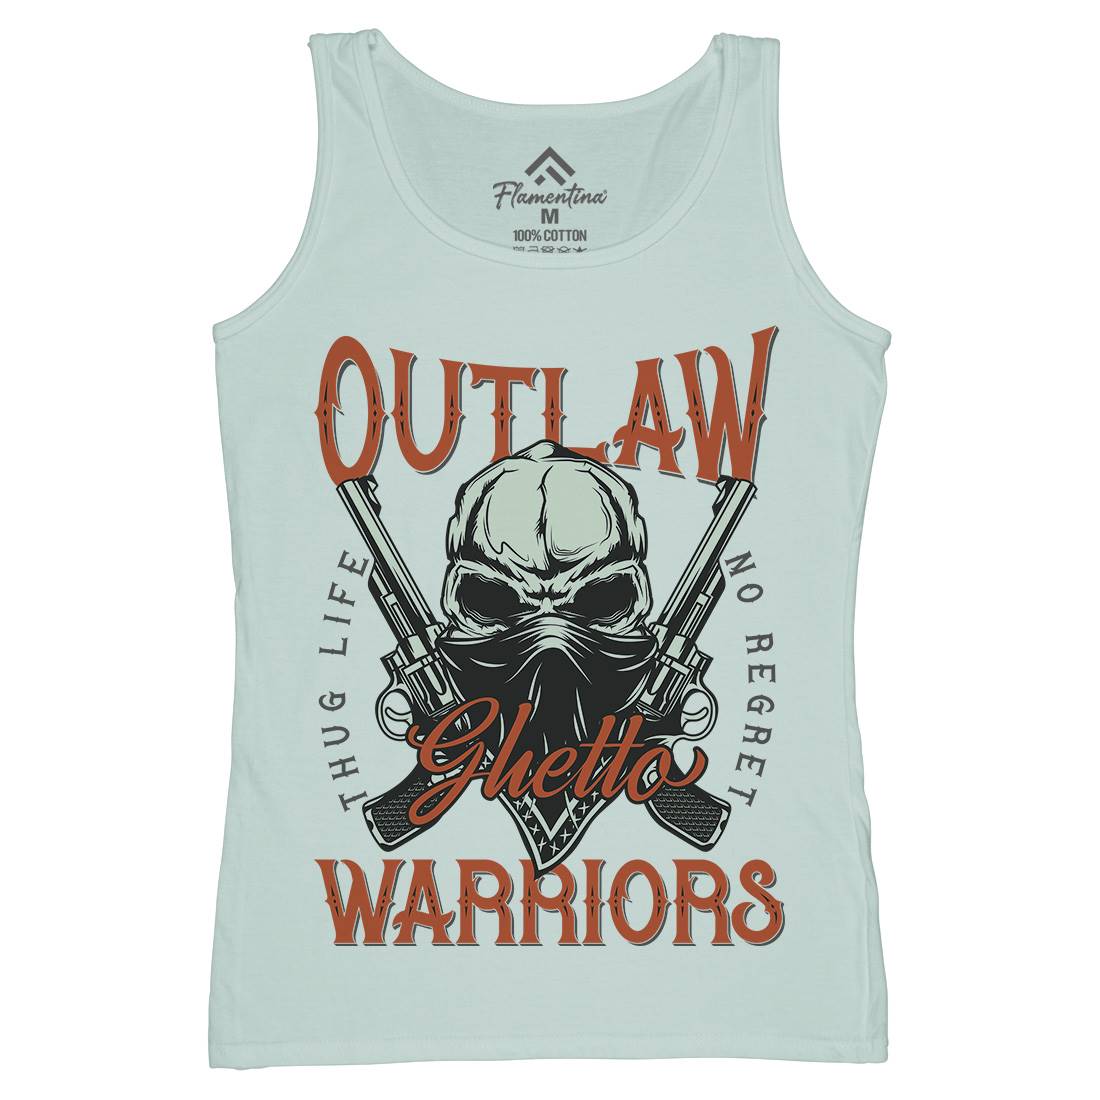 Outlaw Warriors Womens Organic Tank Top Vest Retro D959